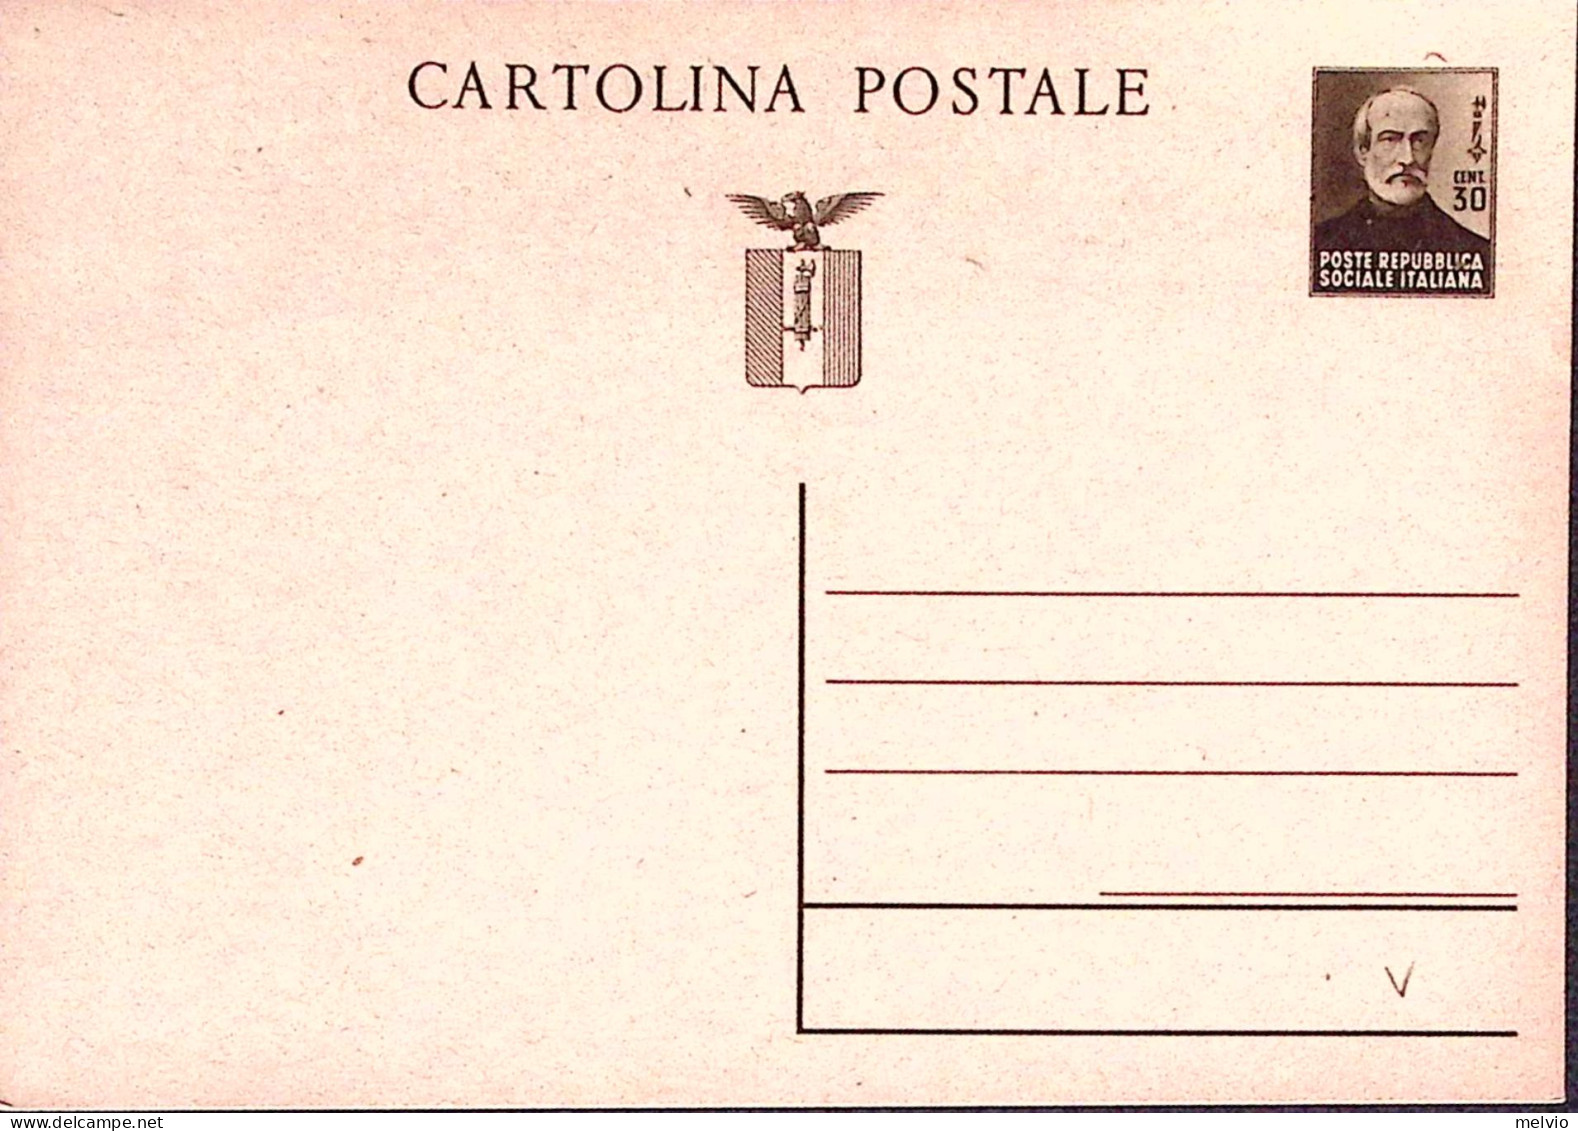 1944-CARTOLINA POSTALE Mazzini C.30 Nuova - Marcofilie